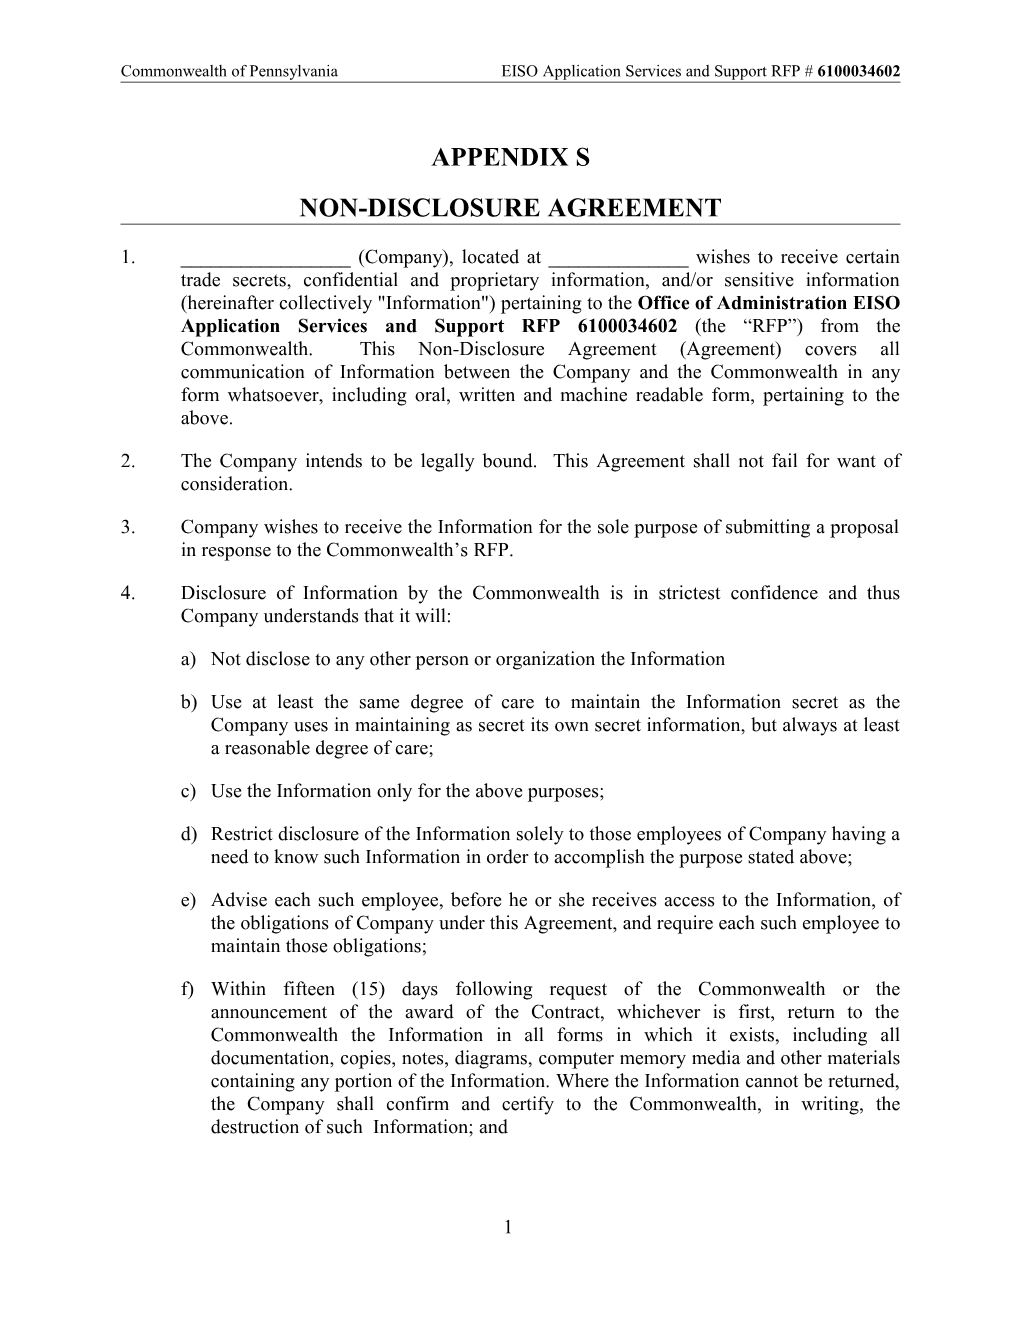 Non-Disclosure Agreement s8